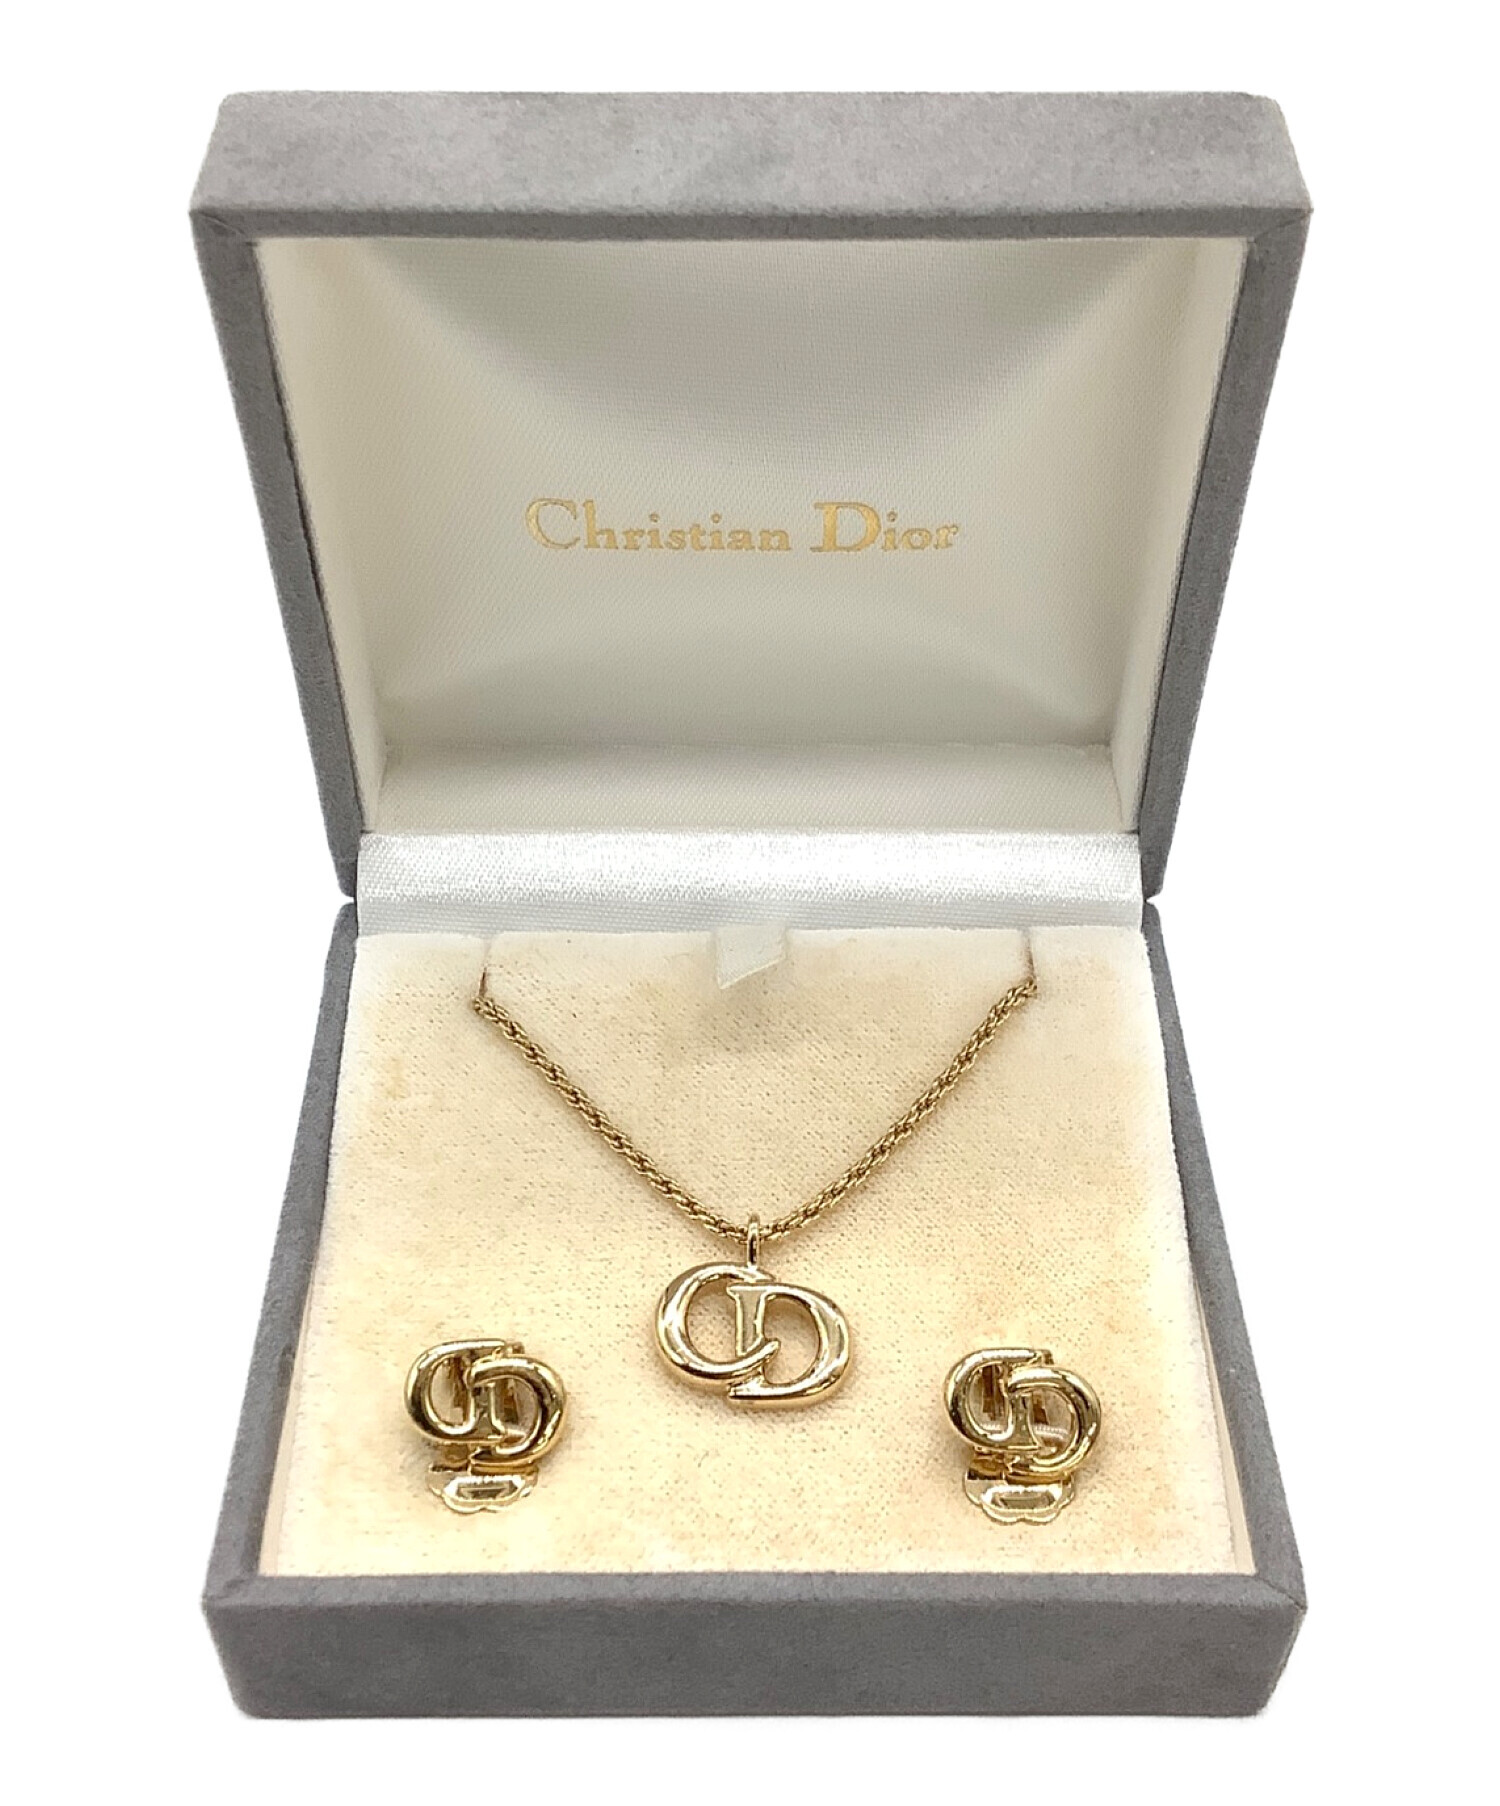 Christian Dior (クリスチャン ディオール) イヤリング&ネックレスセット ゴールドカラー